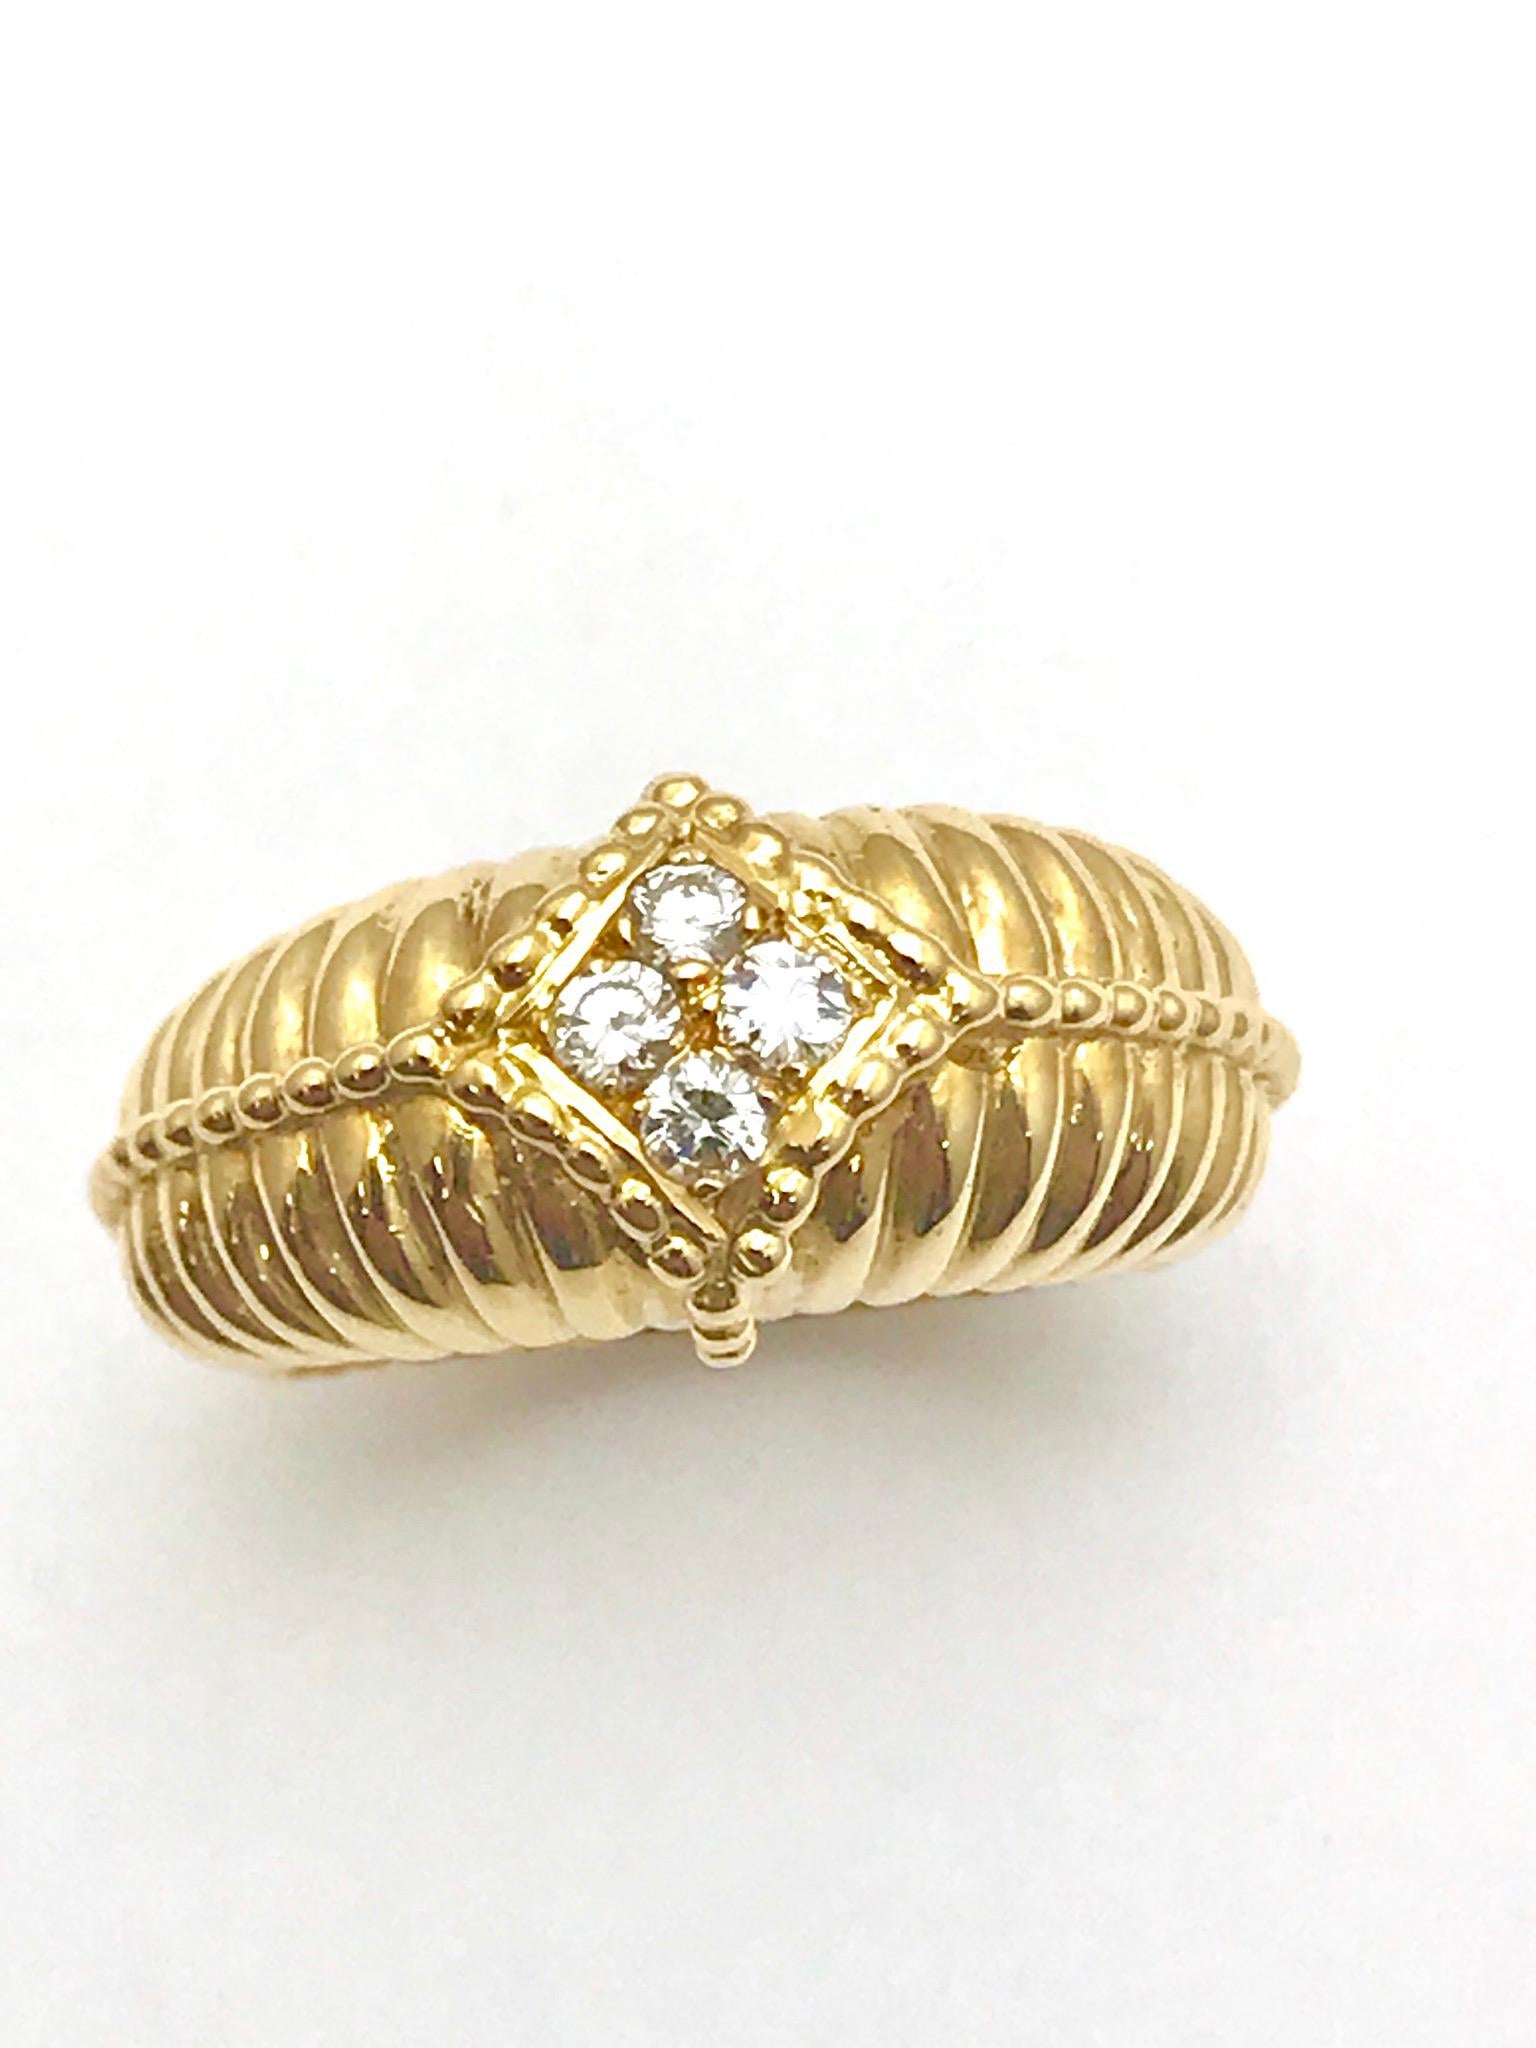 Modern Van Cleef & Arpels Diamond and 18 Karat Yellow Gold Ring